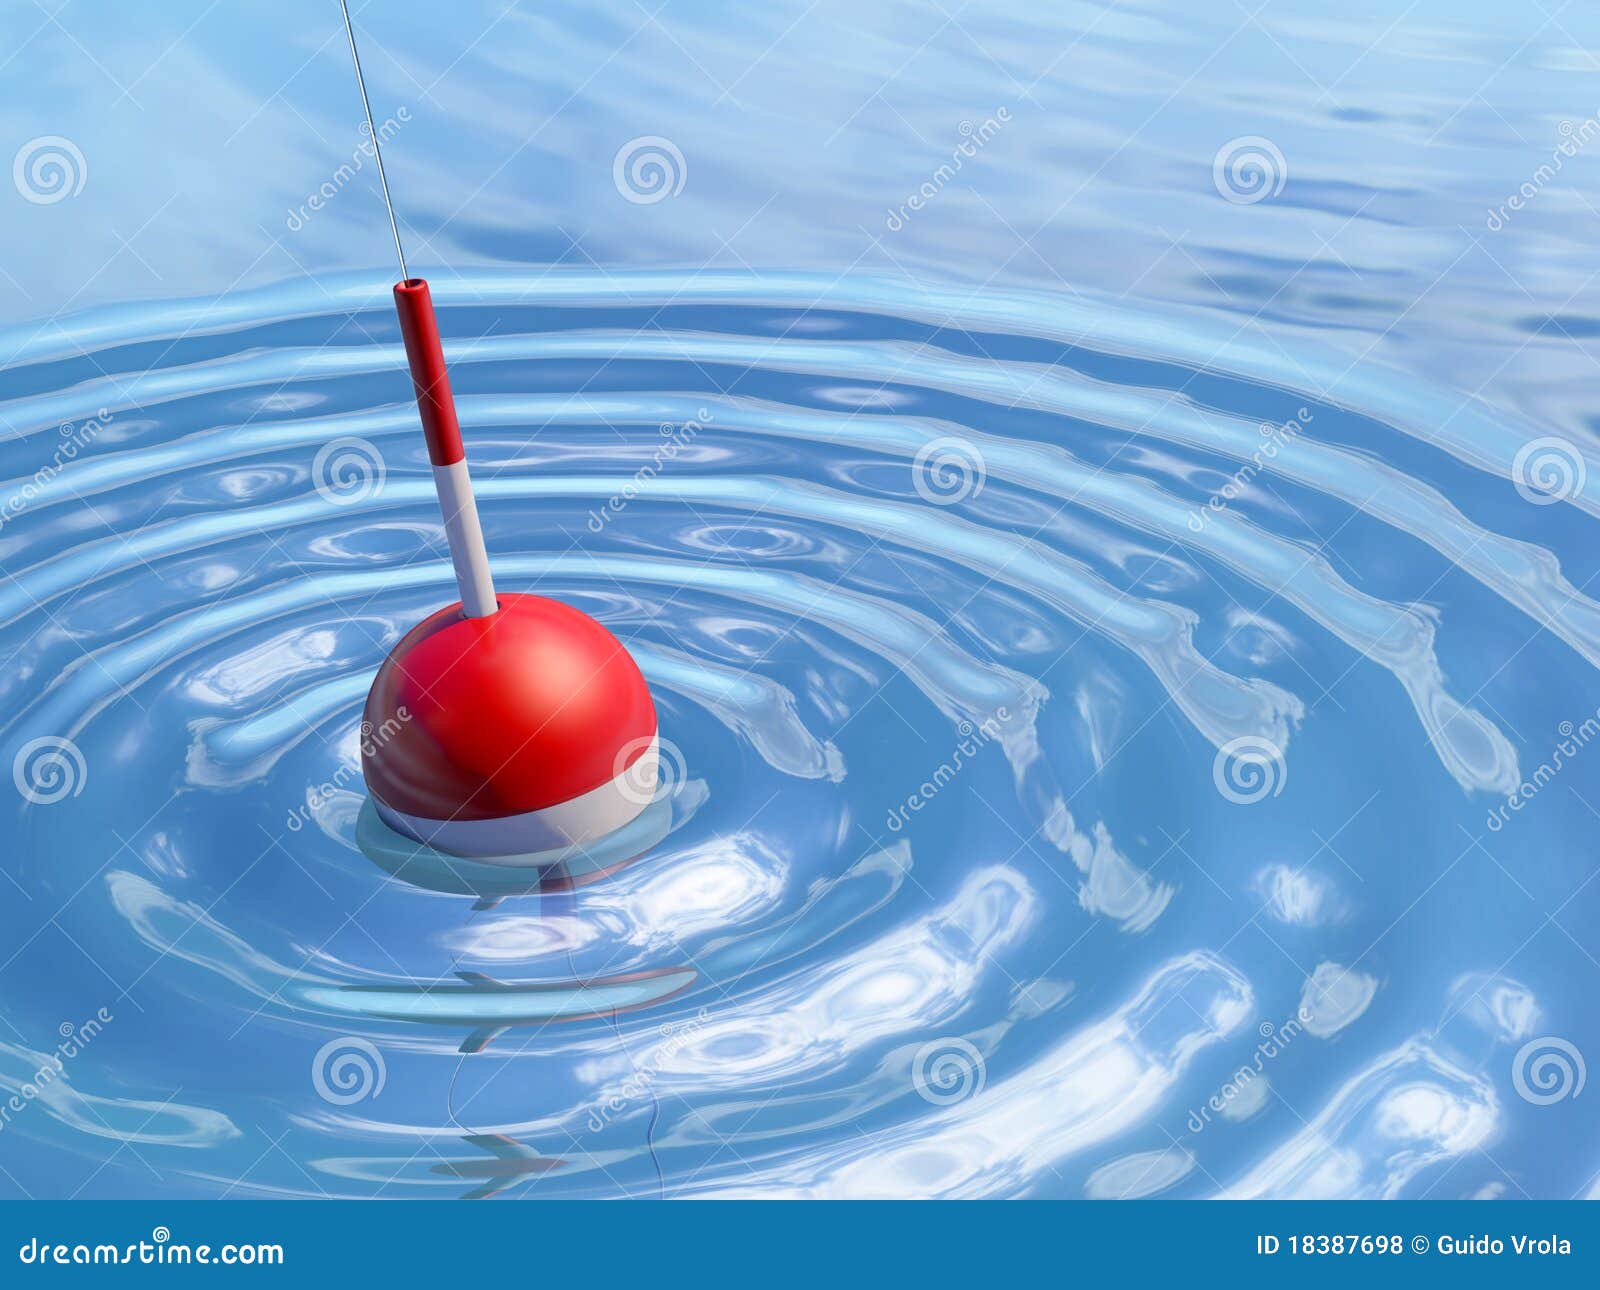 Float in the water stock illustration. Illustration of bobber - 18387698